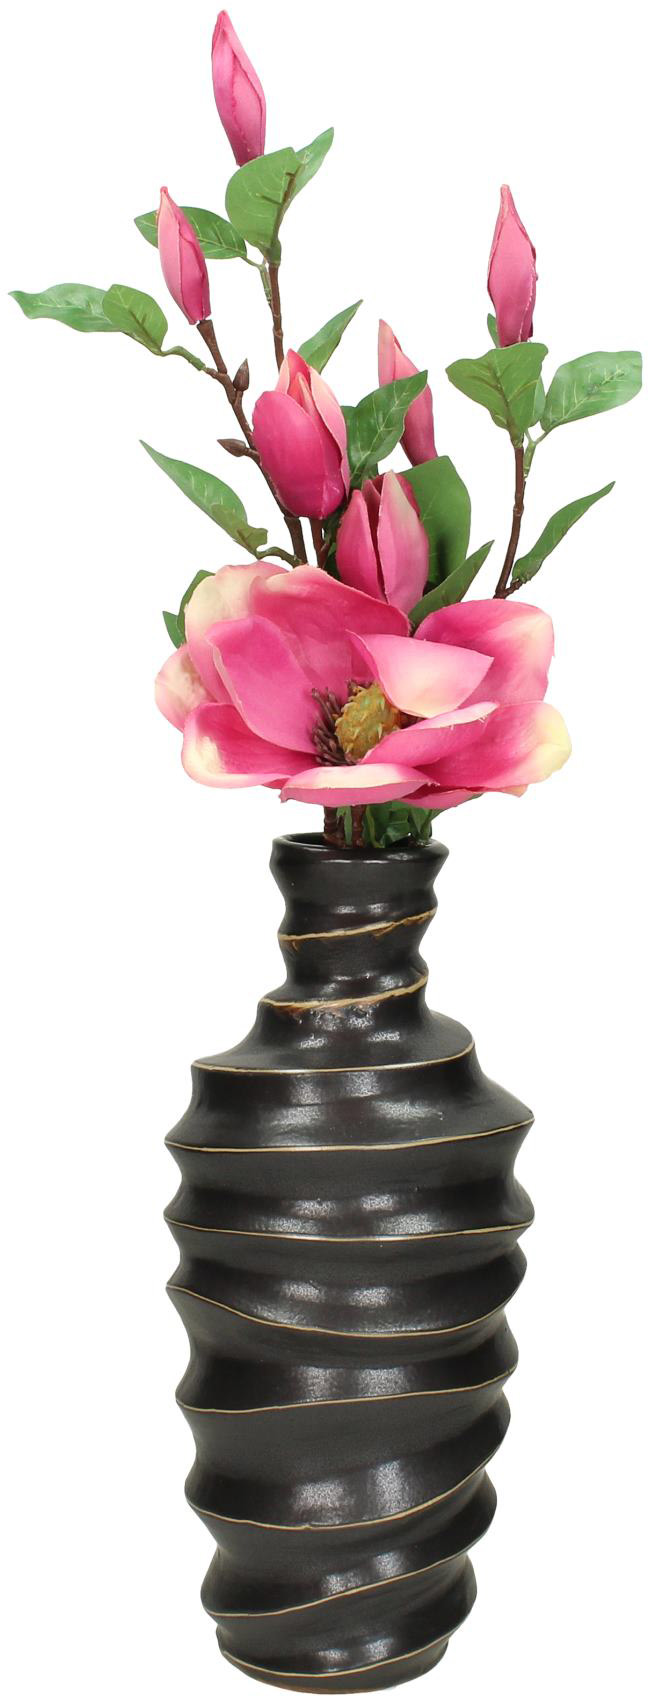 Vase Black 30x13x13cm